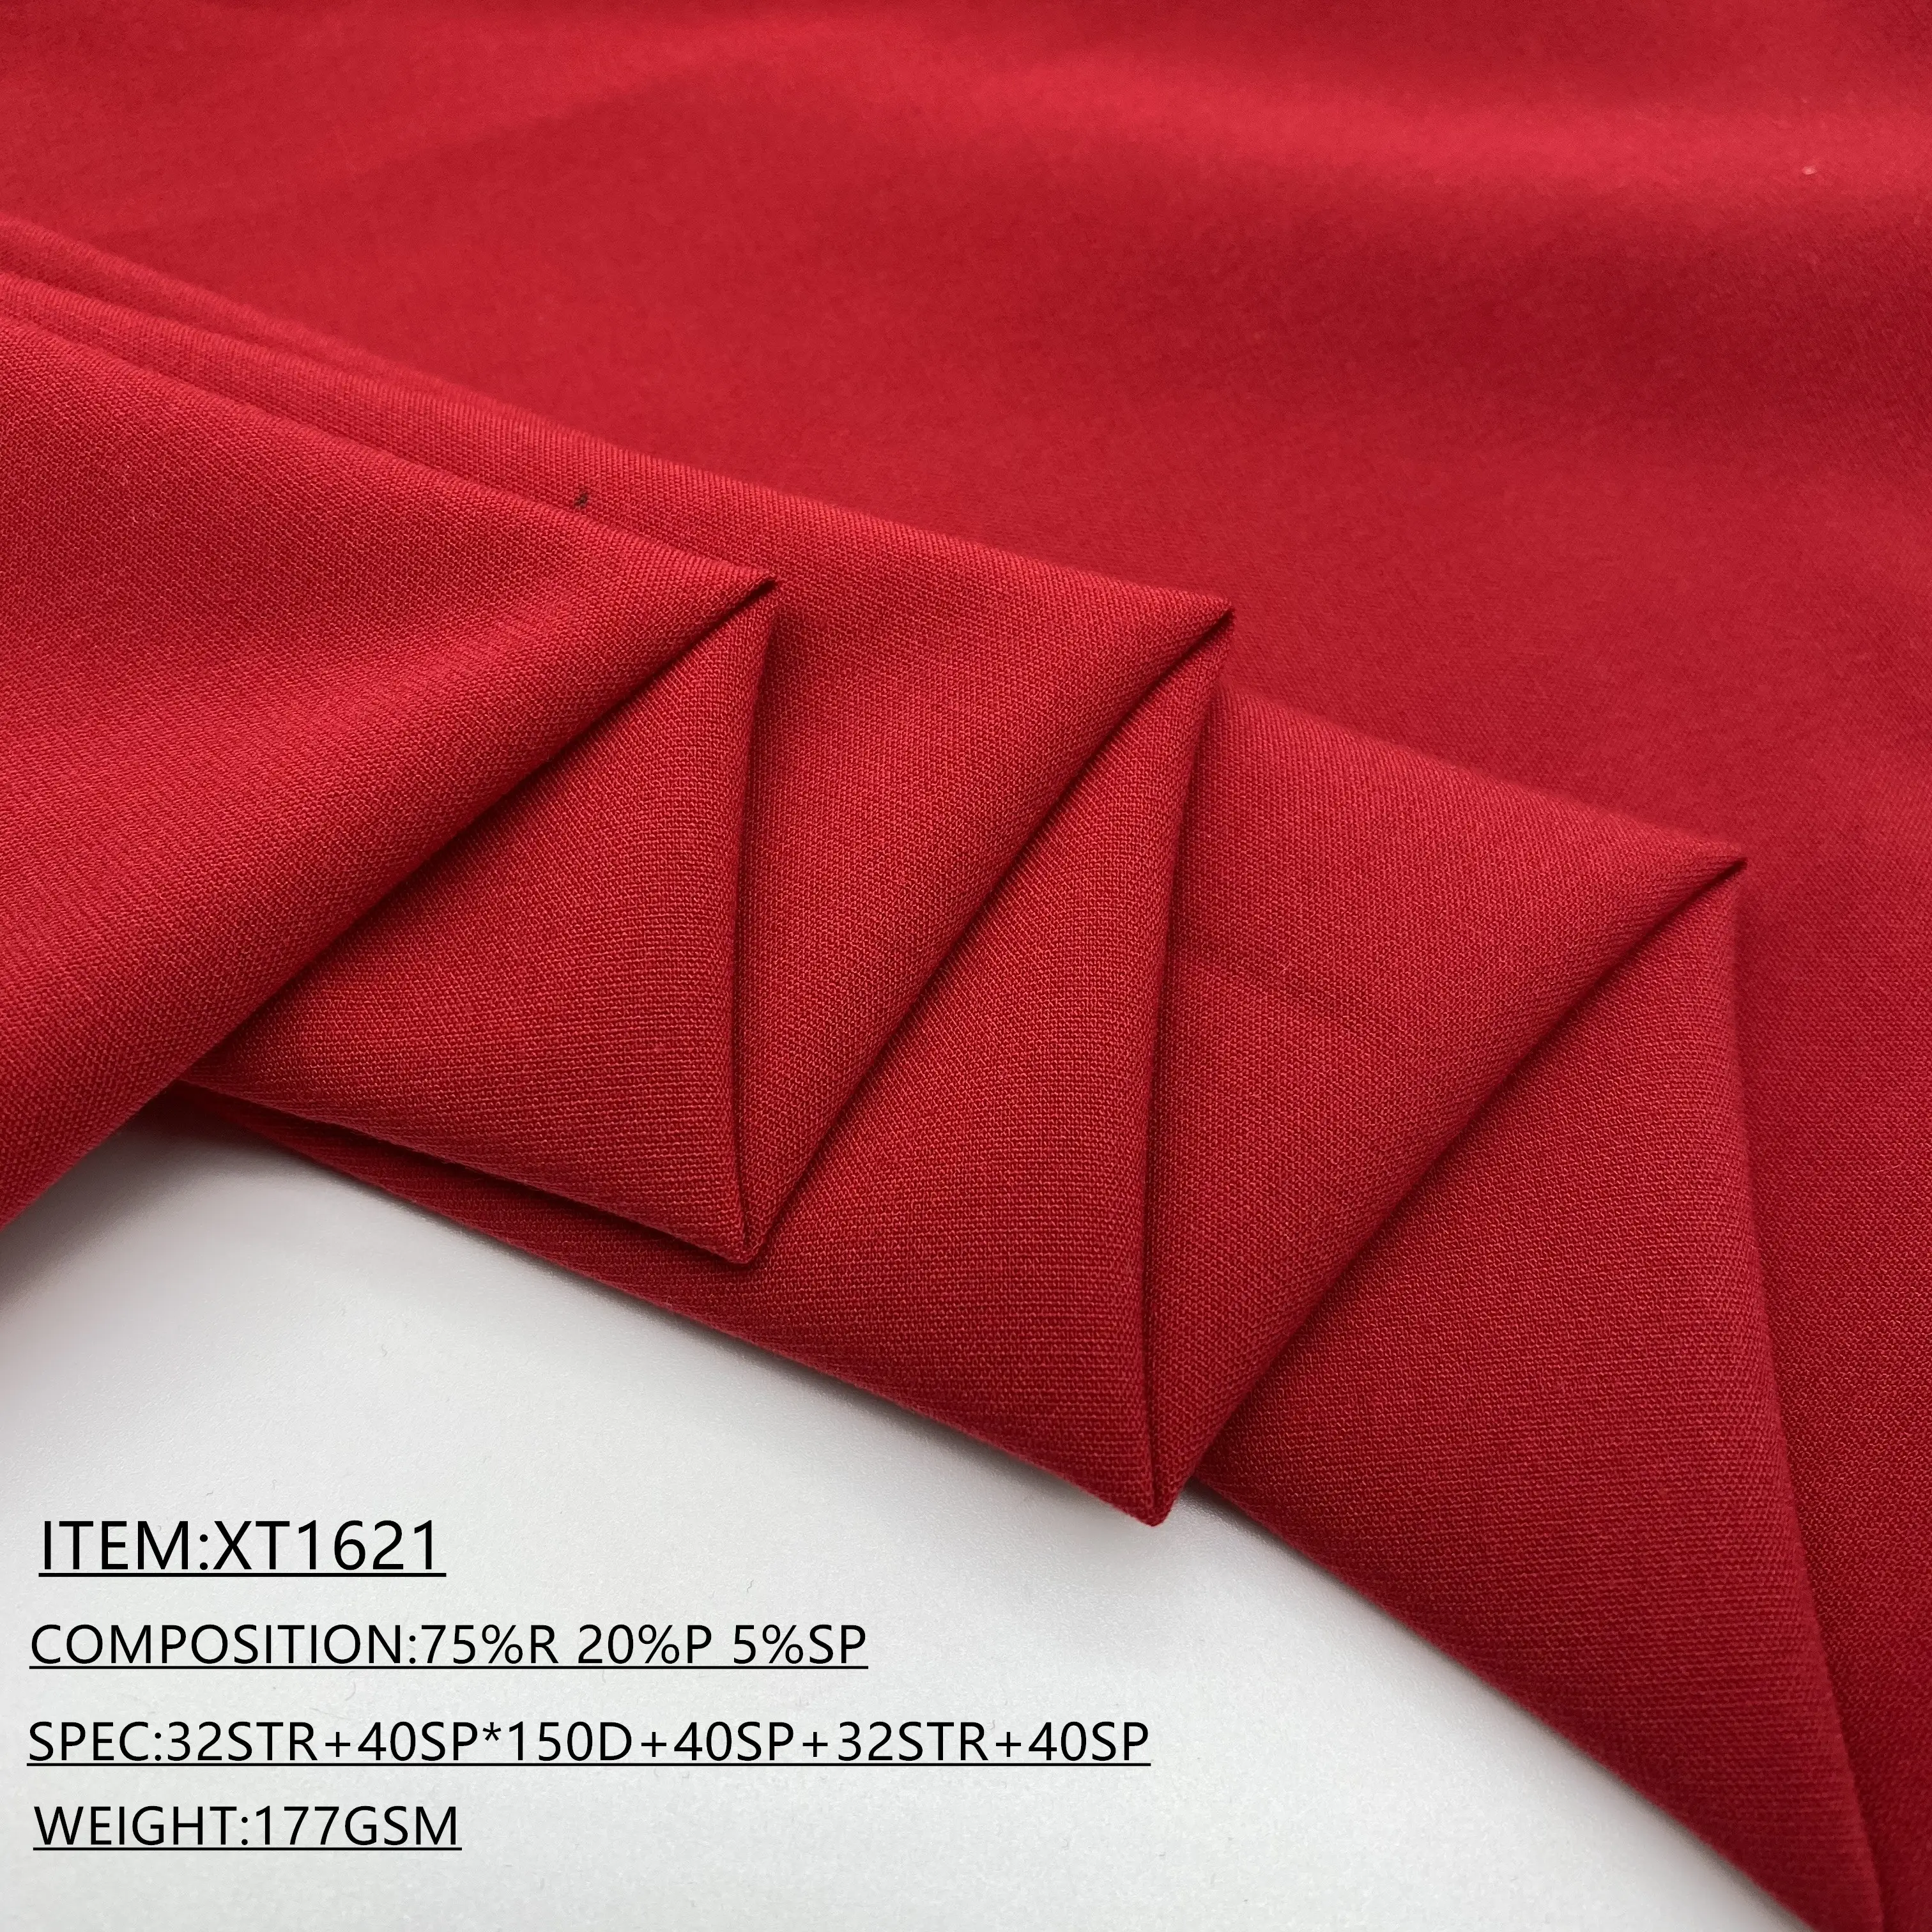 Professional Manufacturer Supplier spandex TR blended fabrics for garments